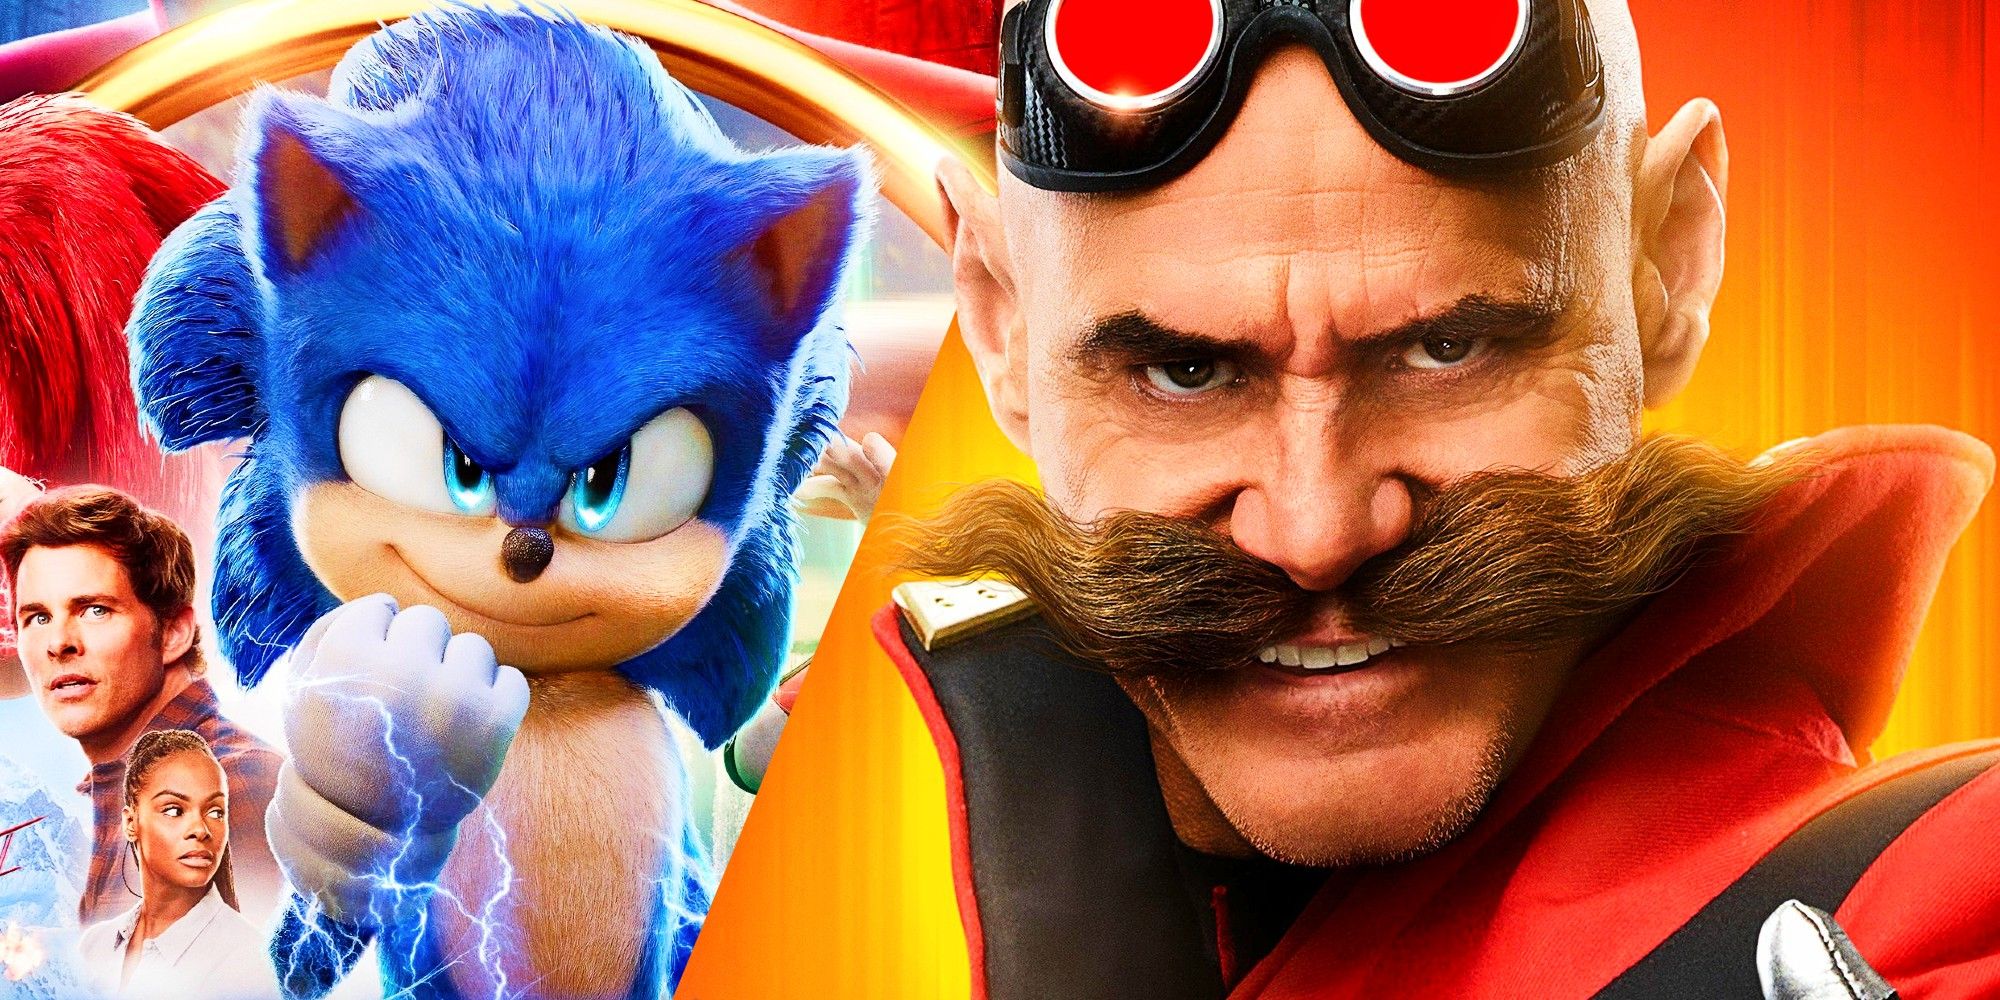 Sonic the Hedgehog 2' Has One Post-Credit Scene (Spoilers